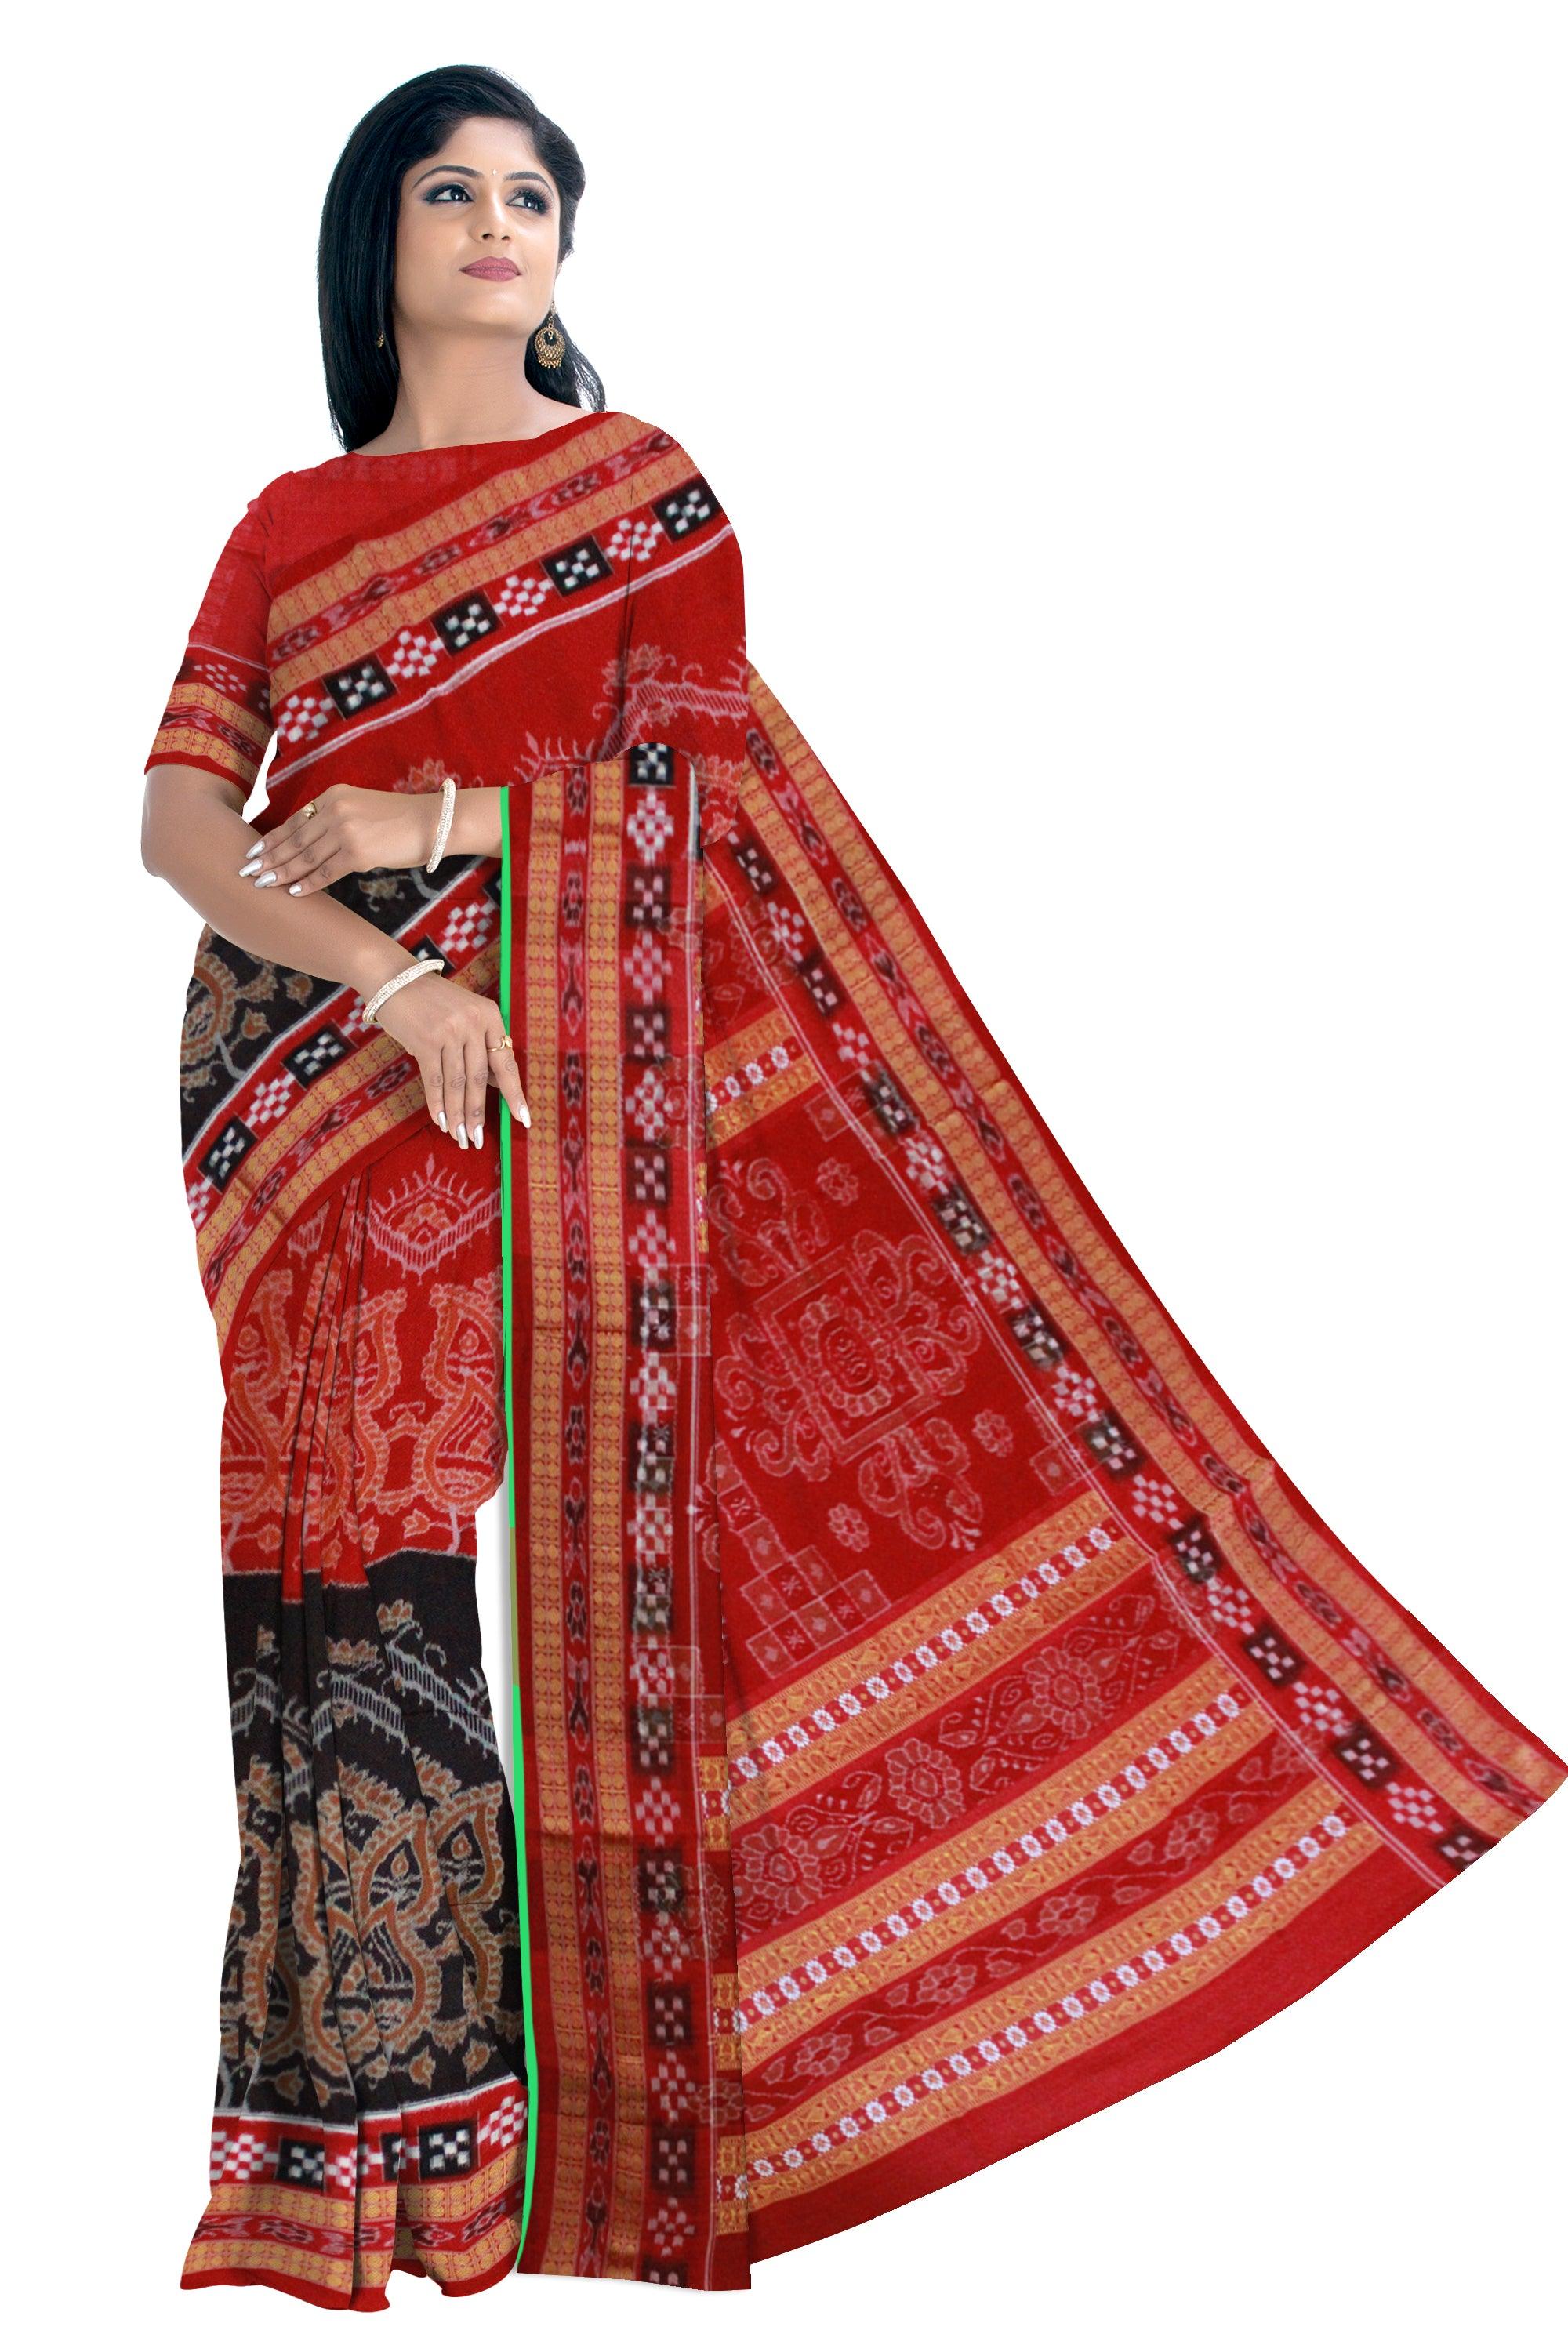 Dhadi Pasapali Sambalpuri saree Bandha Design in Maroon and Black Colour - Koshali Arts & Crafts Enterprise